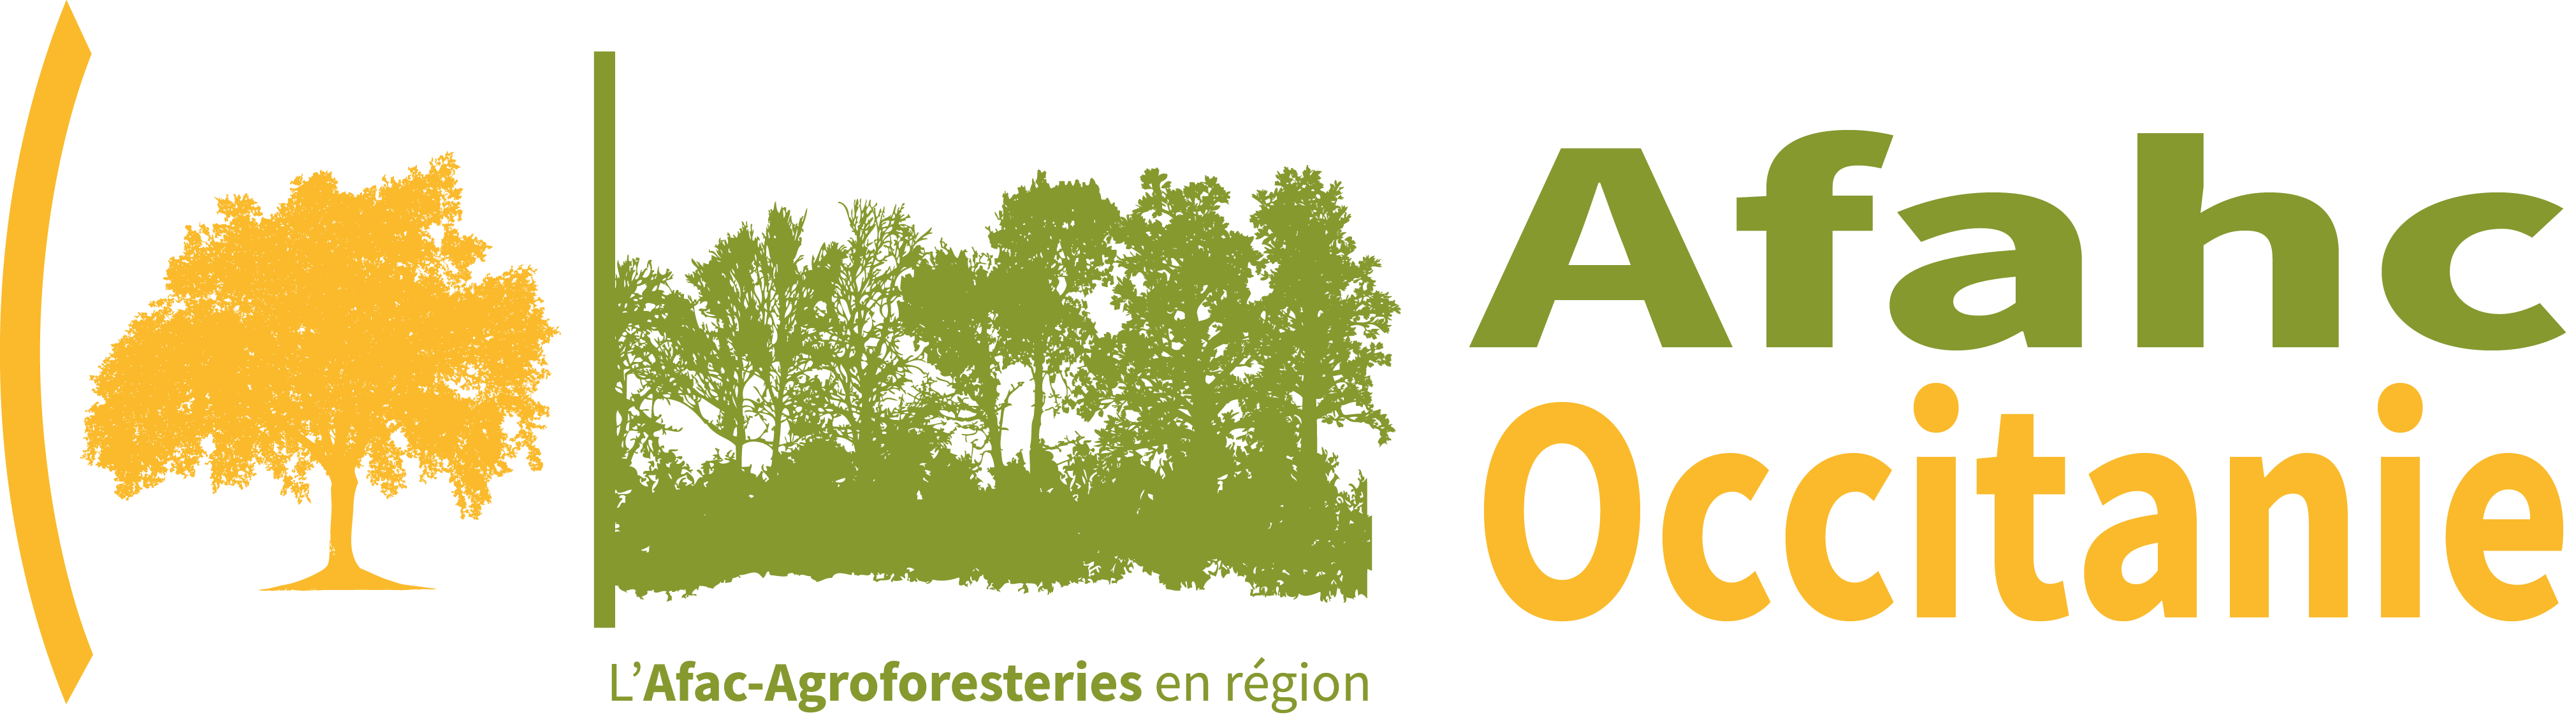 Logo Afahc Occitanie